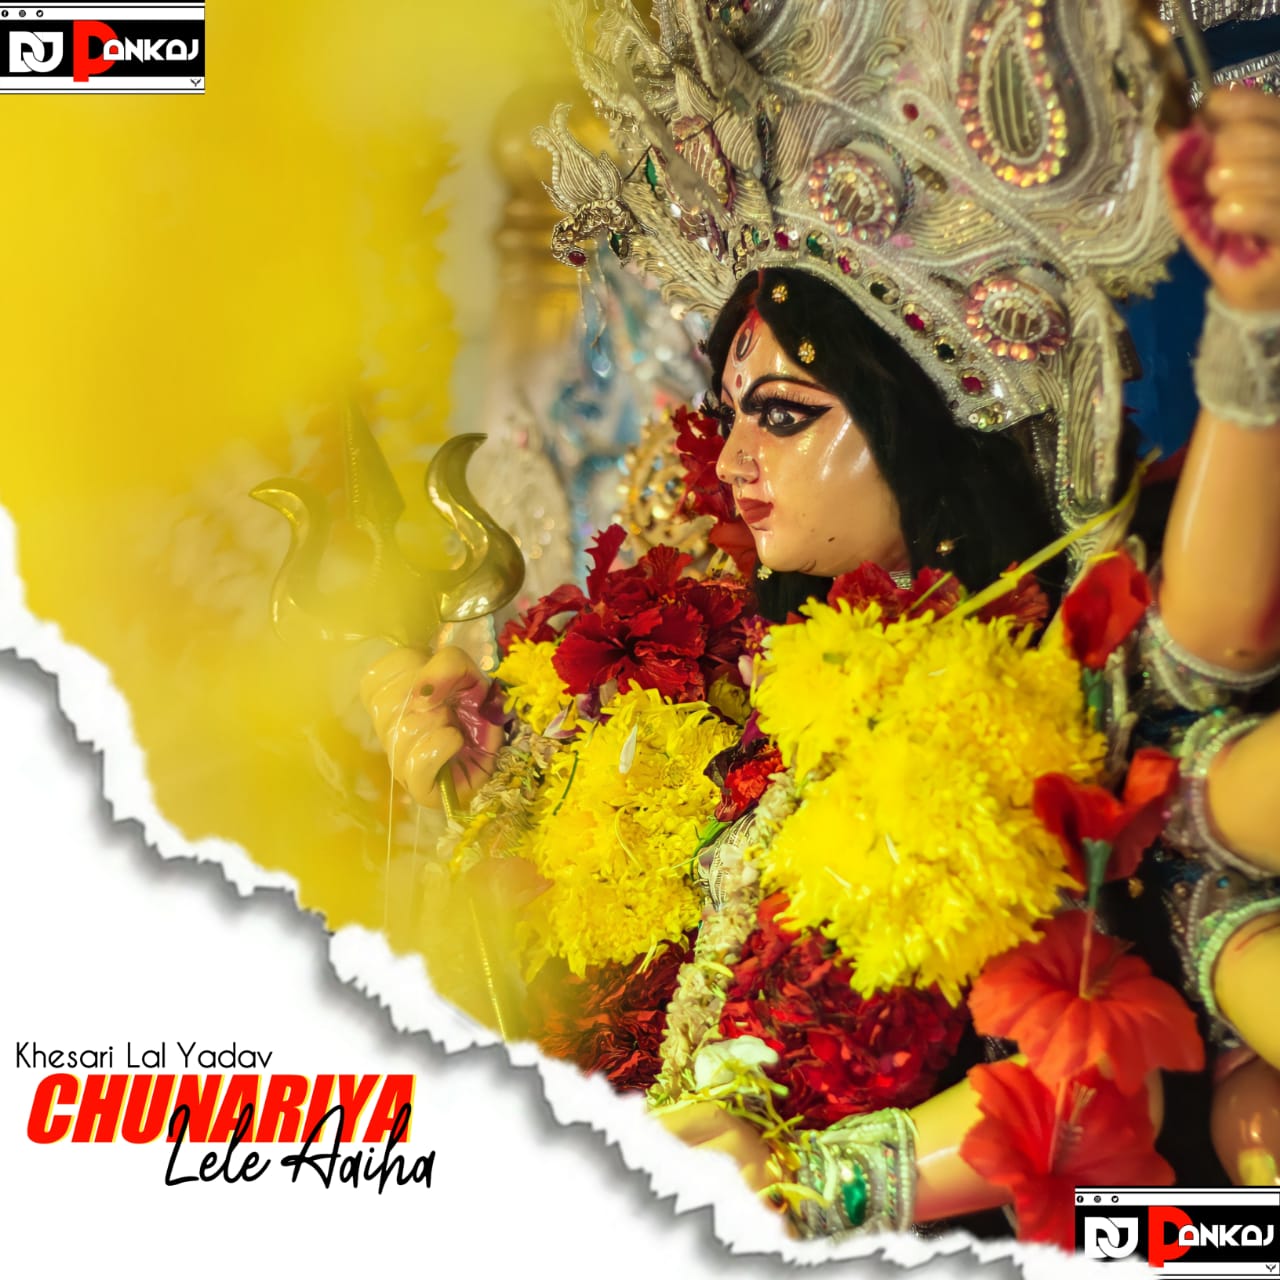 Chunariya Lele Aaiha - Khesari Lal Yadav (Navratri New Jhankar Bass Dance Remix) - Dj Pankaj Dada Tanda